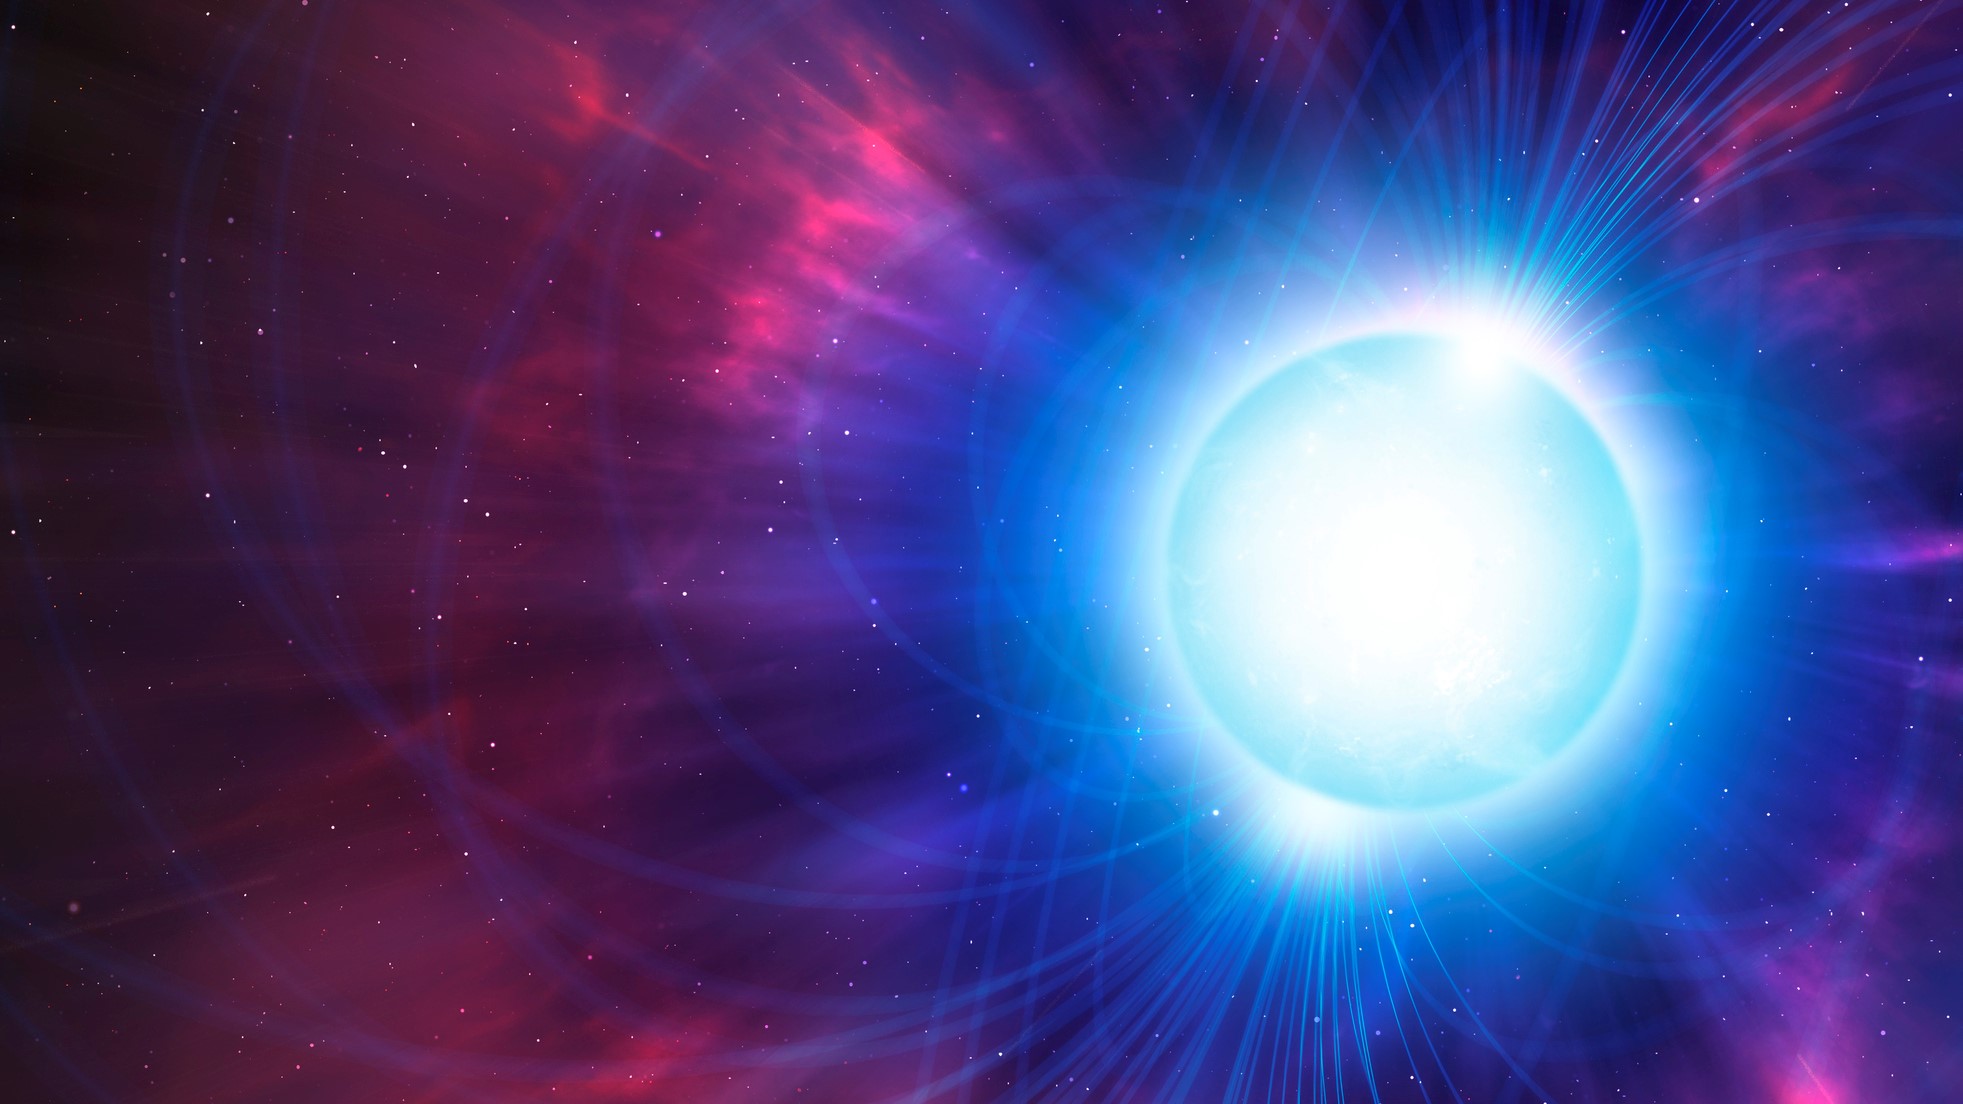 What are neutron stars?